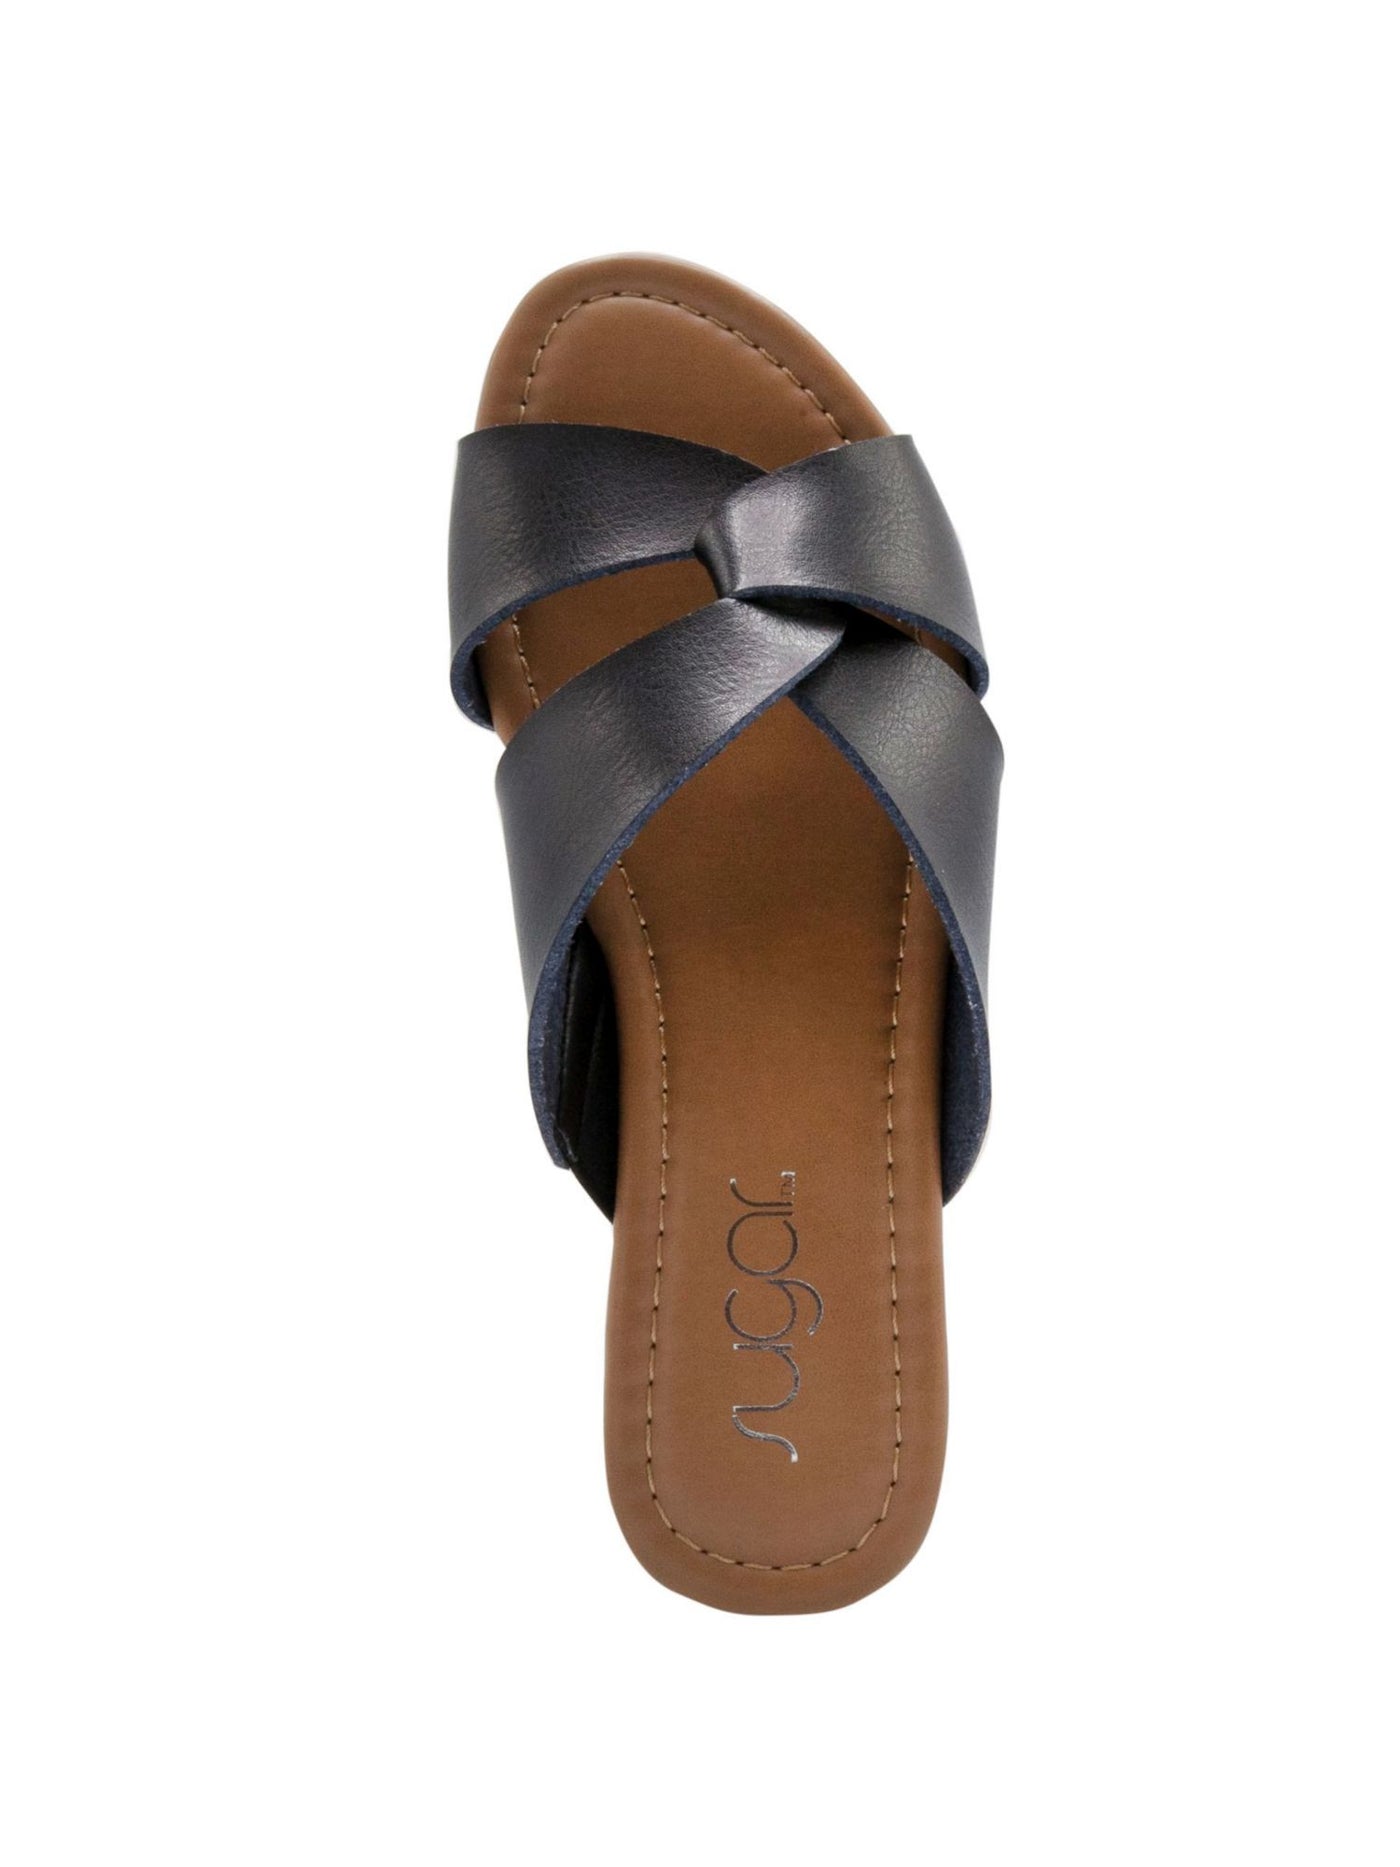 SUGAR Womens Black Knotted Design Comfort Woven Olena Round Toe Block Heel Slip On Slide Sandals Shoes M